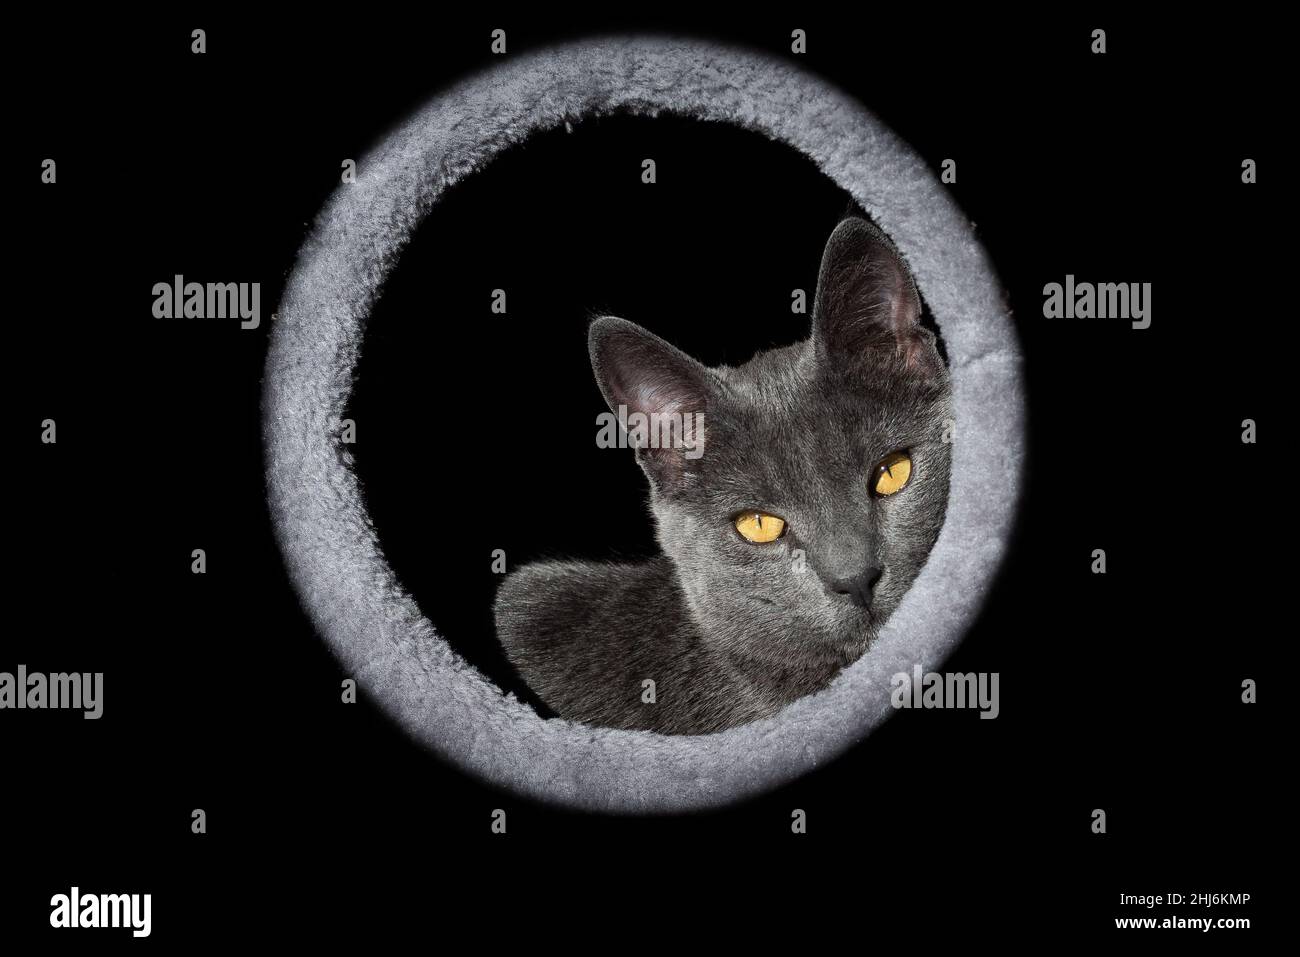 Retrato de un gato joven gris europeo dentro de un círculo. Concepto de animales domésticos. Foto de stock